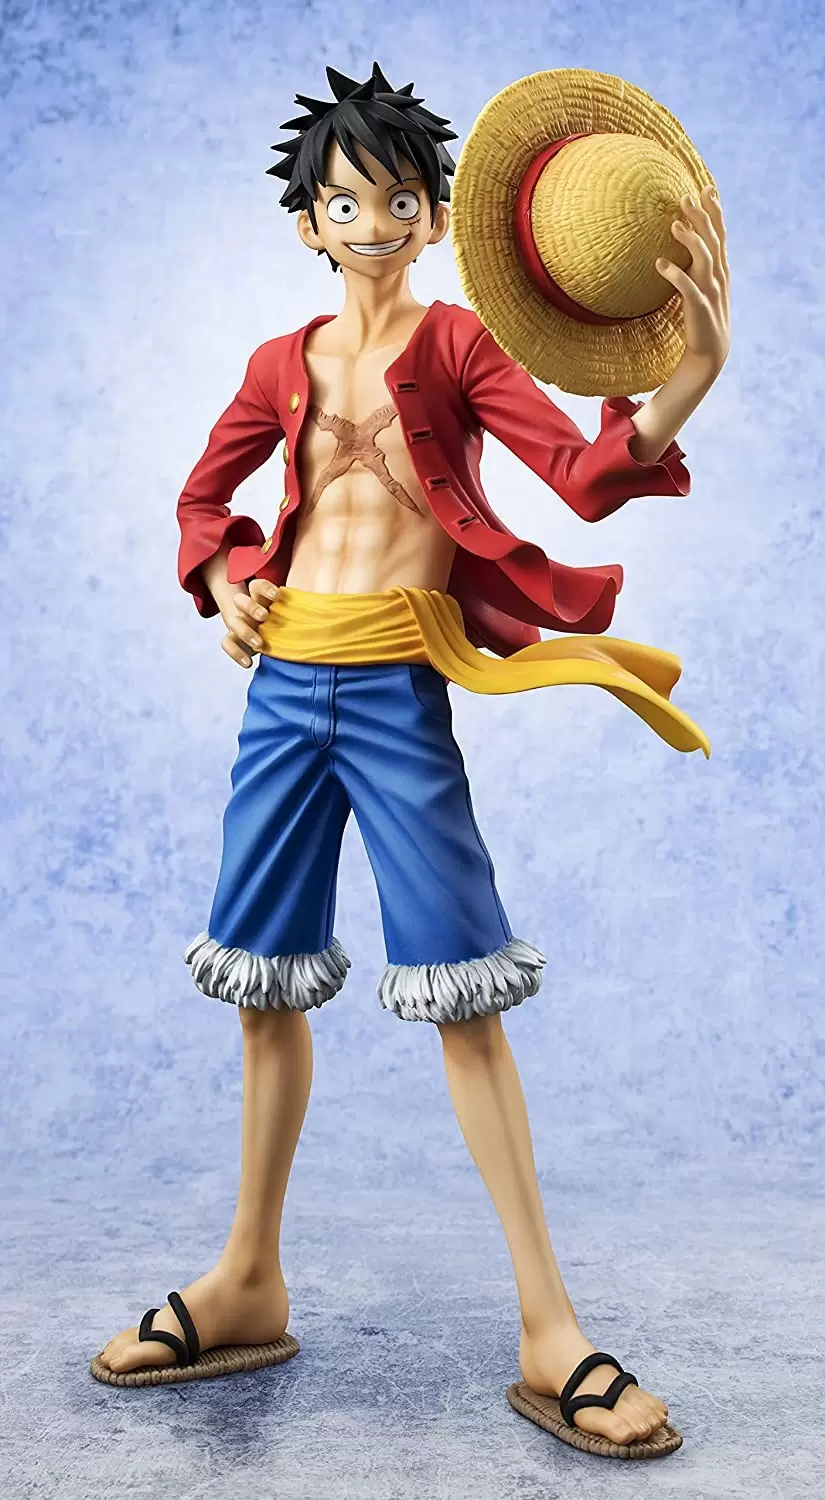 Banpresto – Figurine – One Piece Monkey D. Luffy 25302